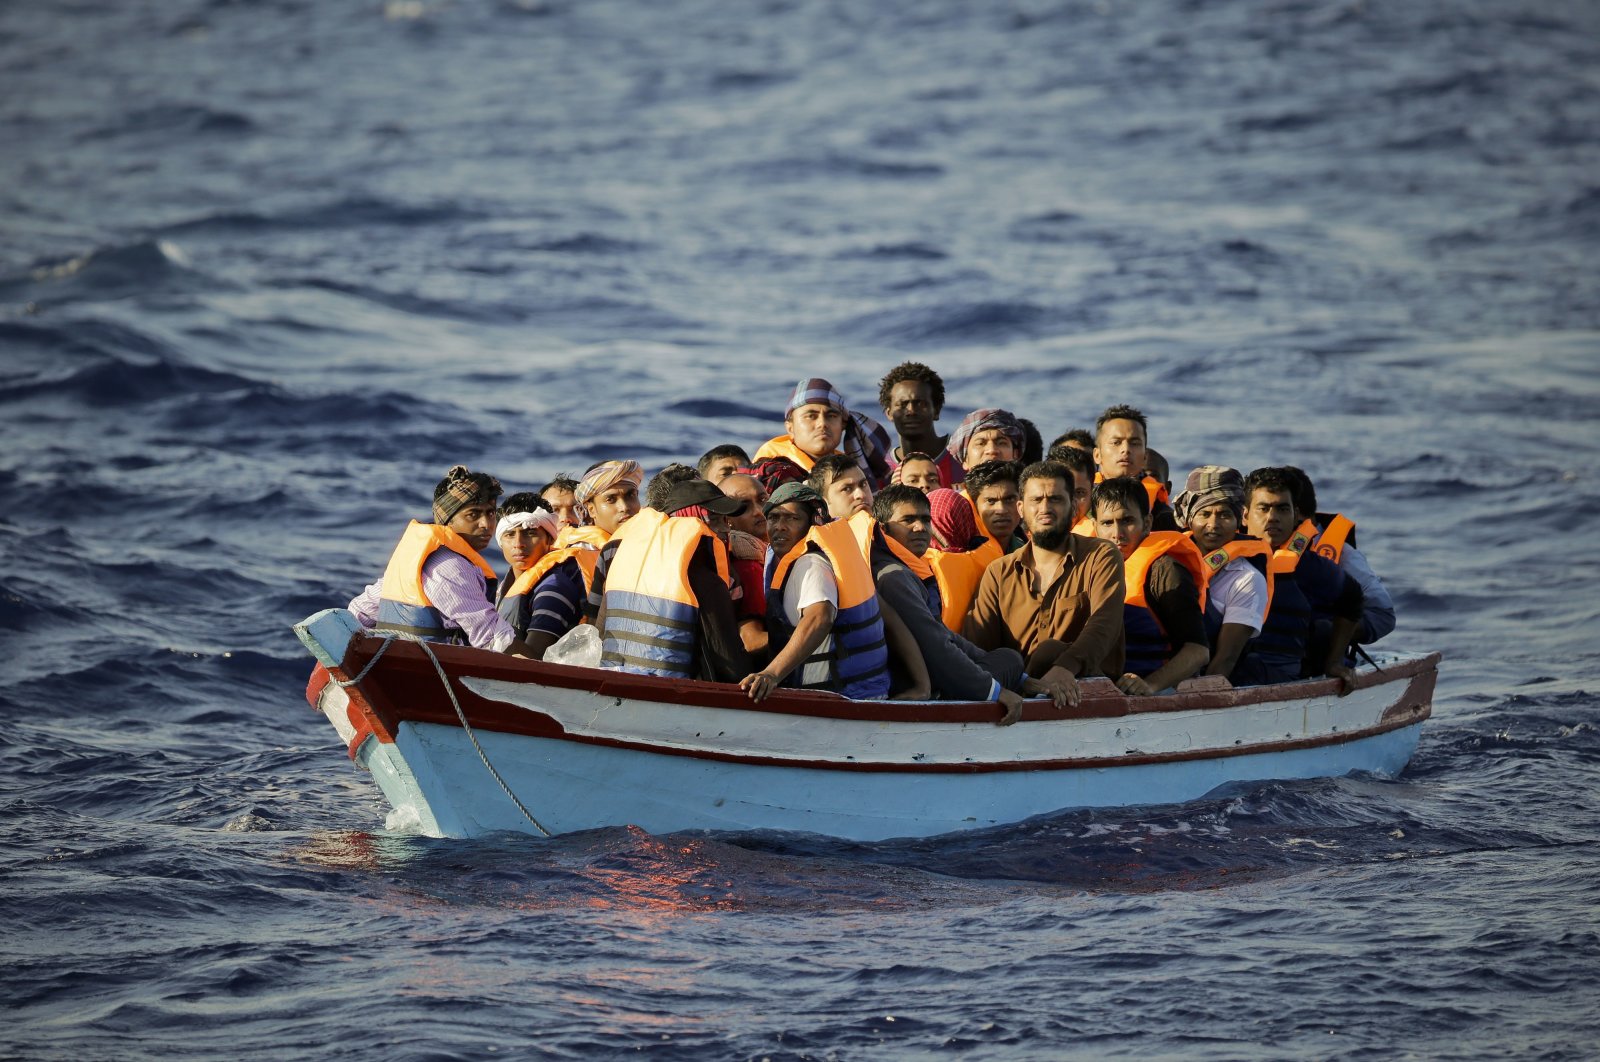 A boat carrying irregular migrants are seen in the Aegean Sea, Dec. 3, 2020. (IHA Photo)